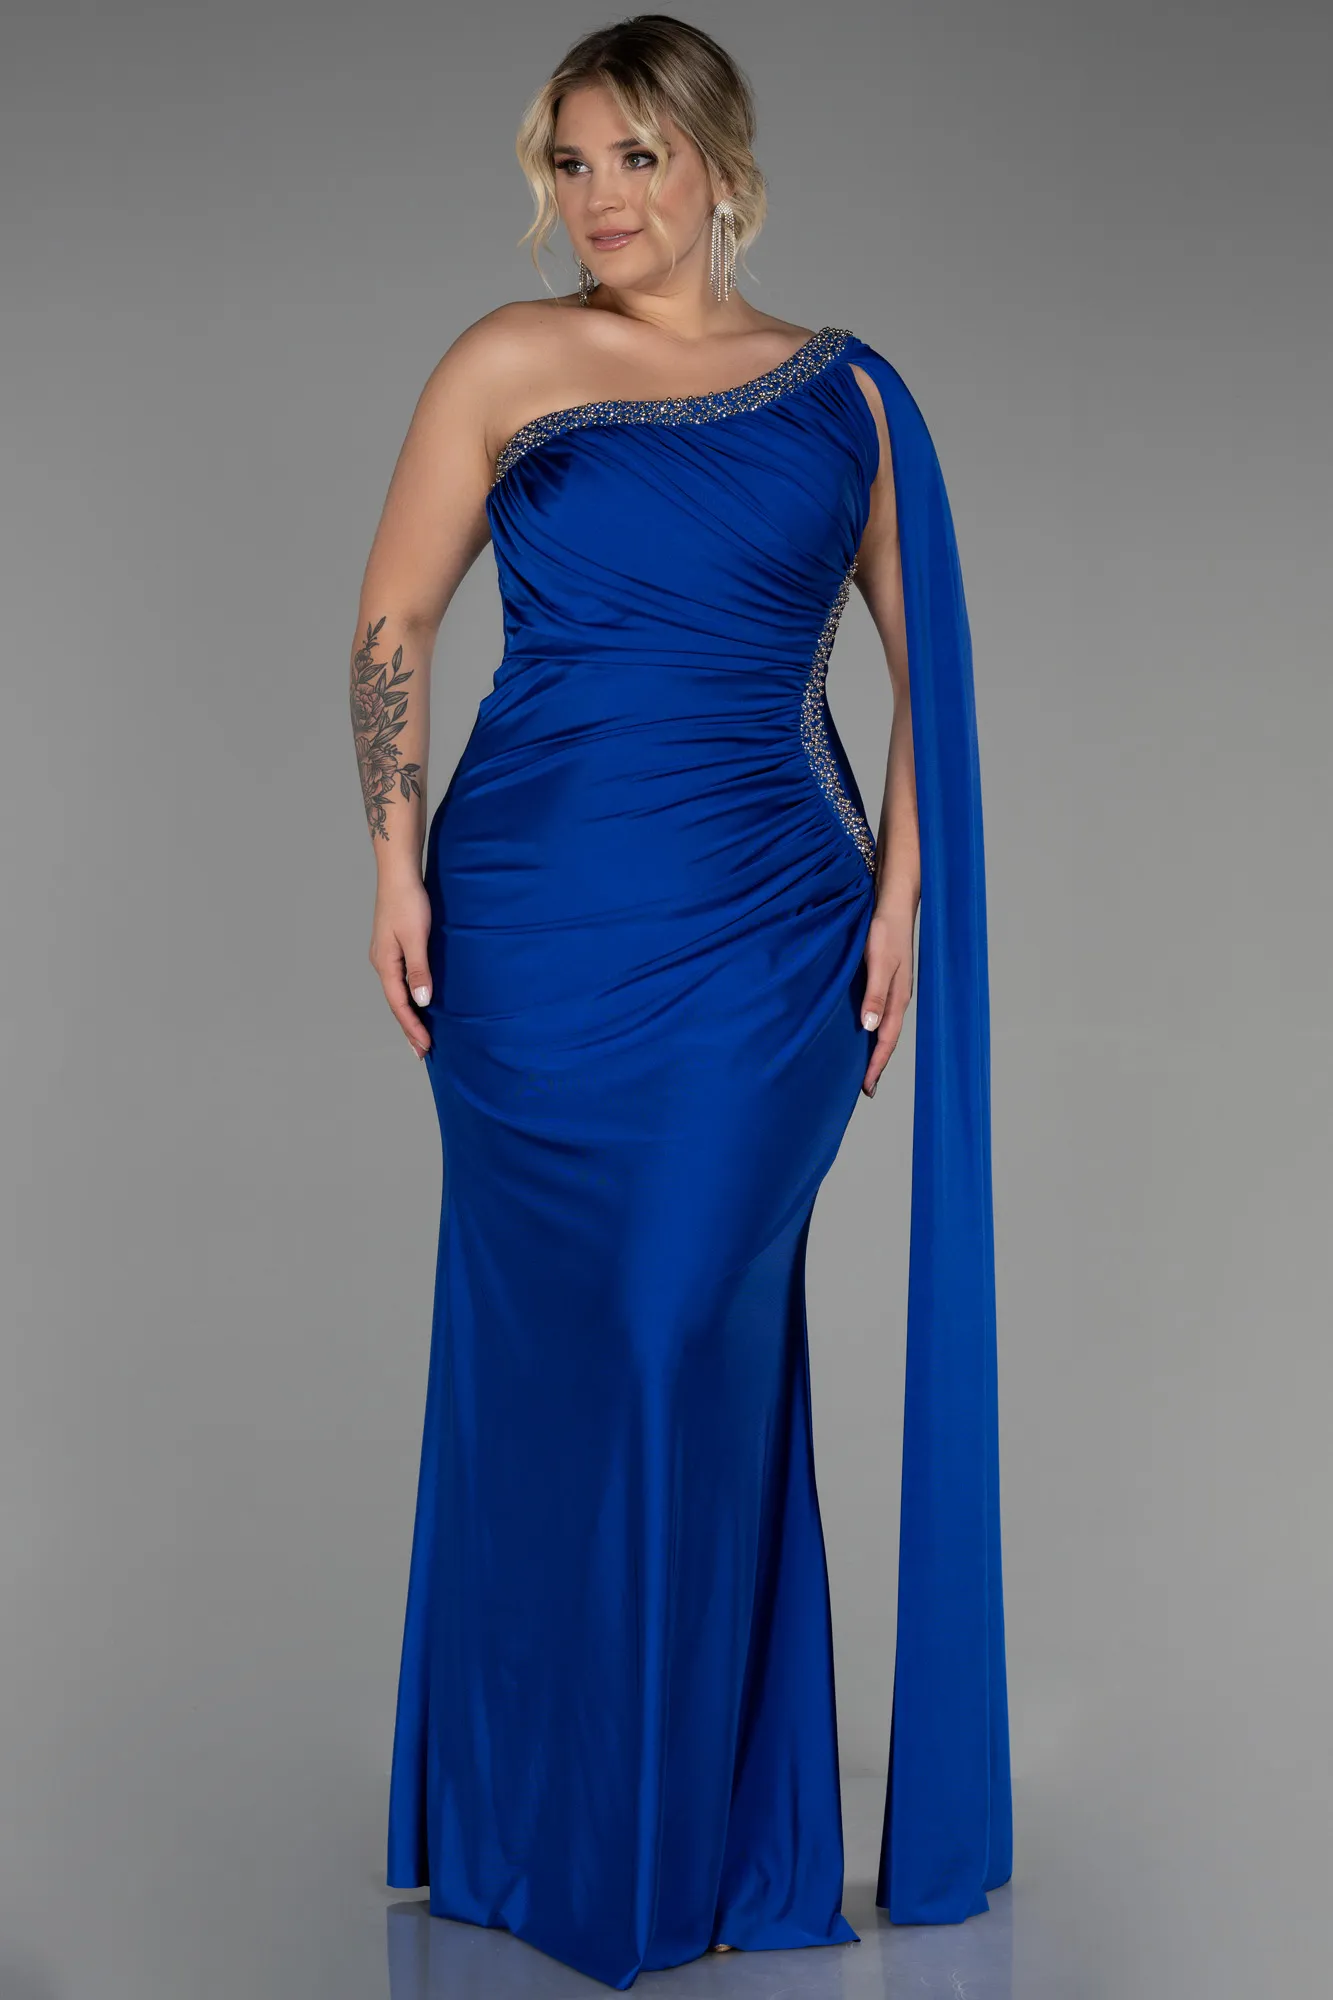 Sax Blue-Long Plus Size Evening Dress ABU3260